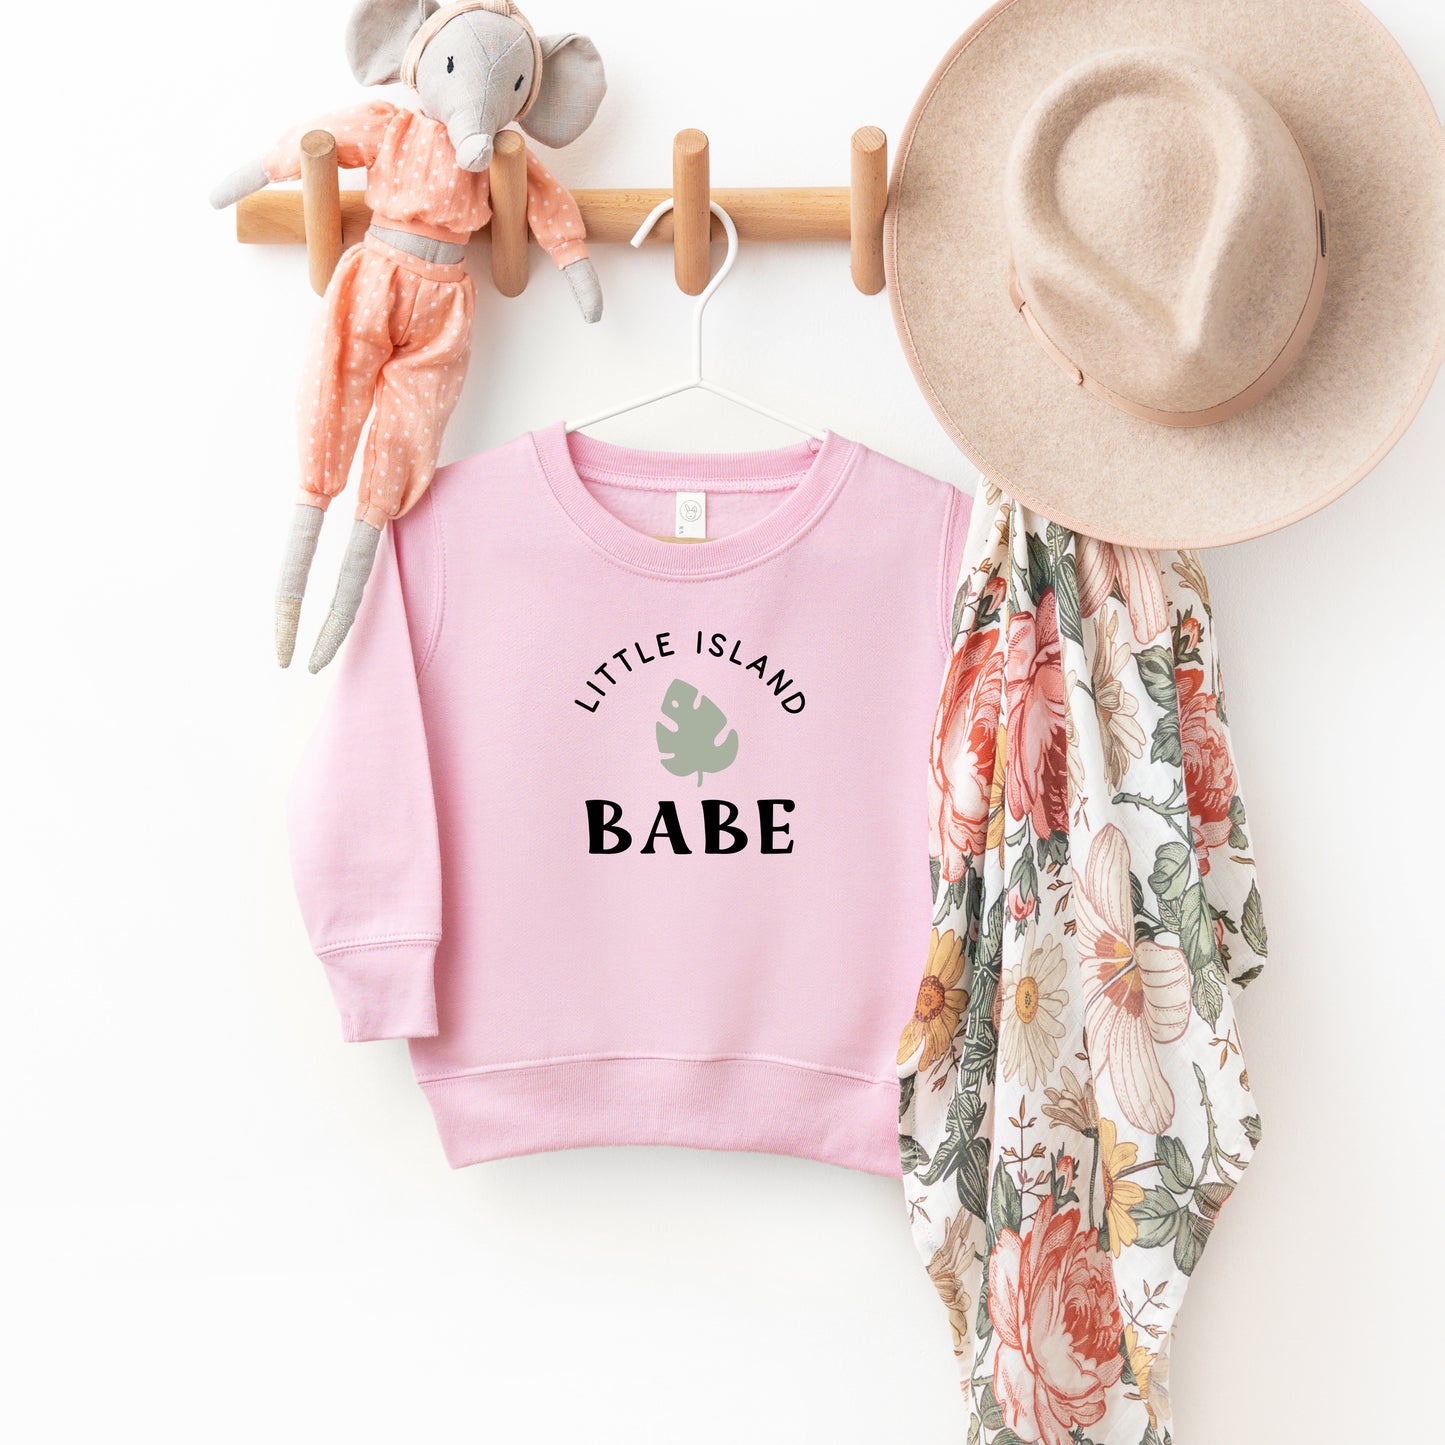 Little Island Babe | Toddler Sweatshirt